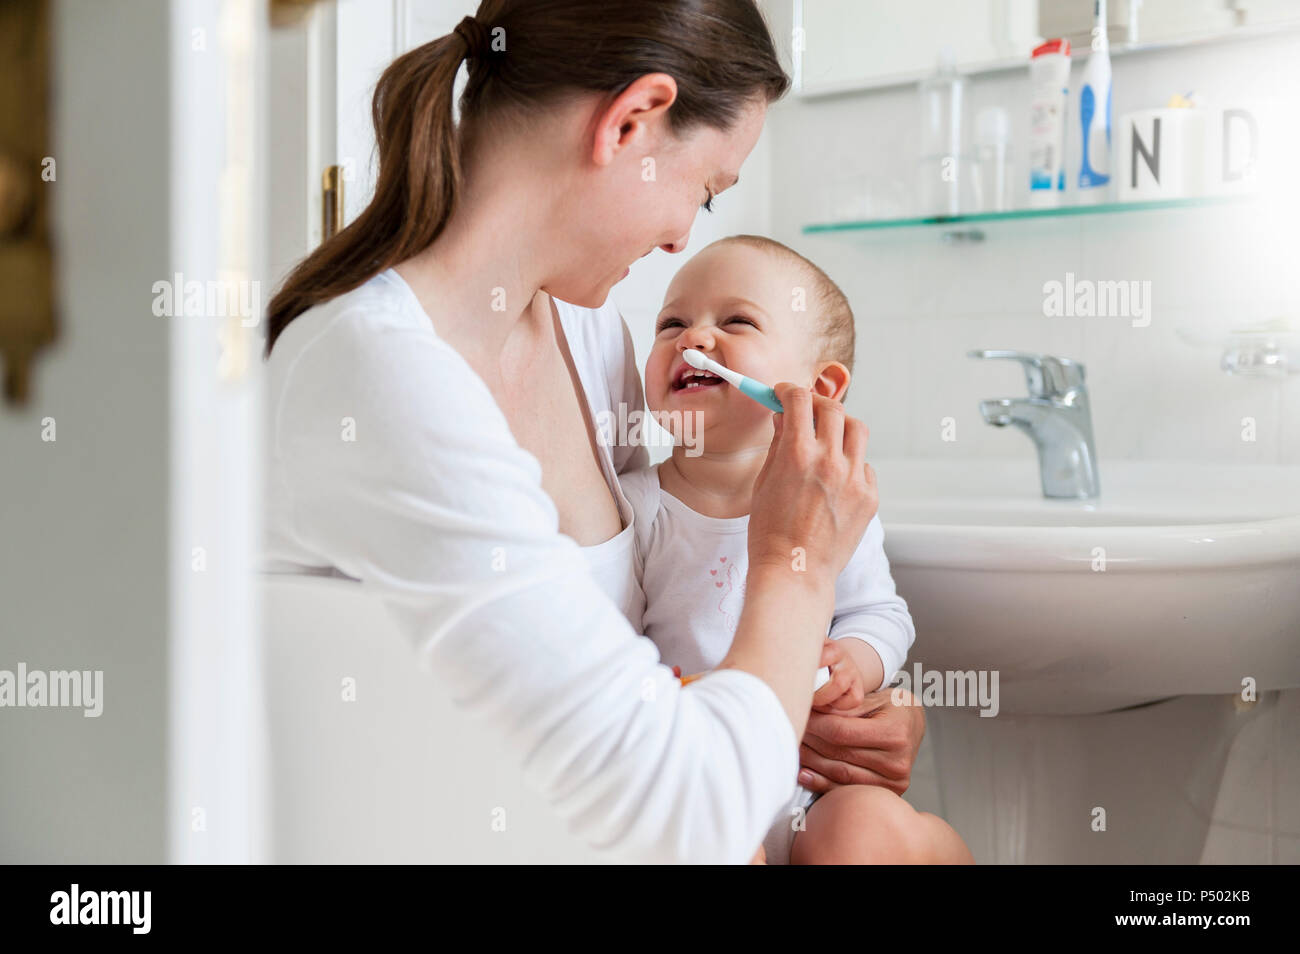 Mother brushing baby's teeth in bathroom Stock Photo